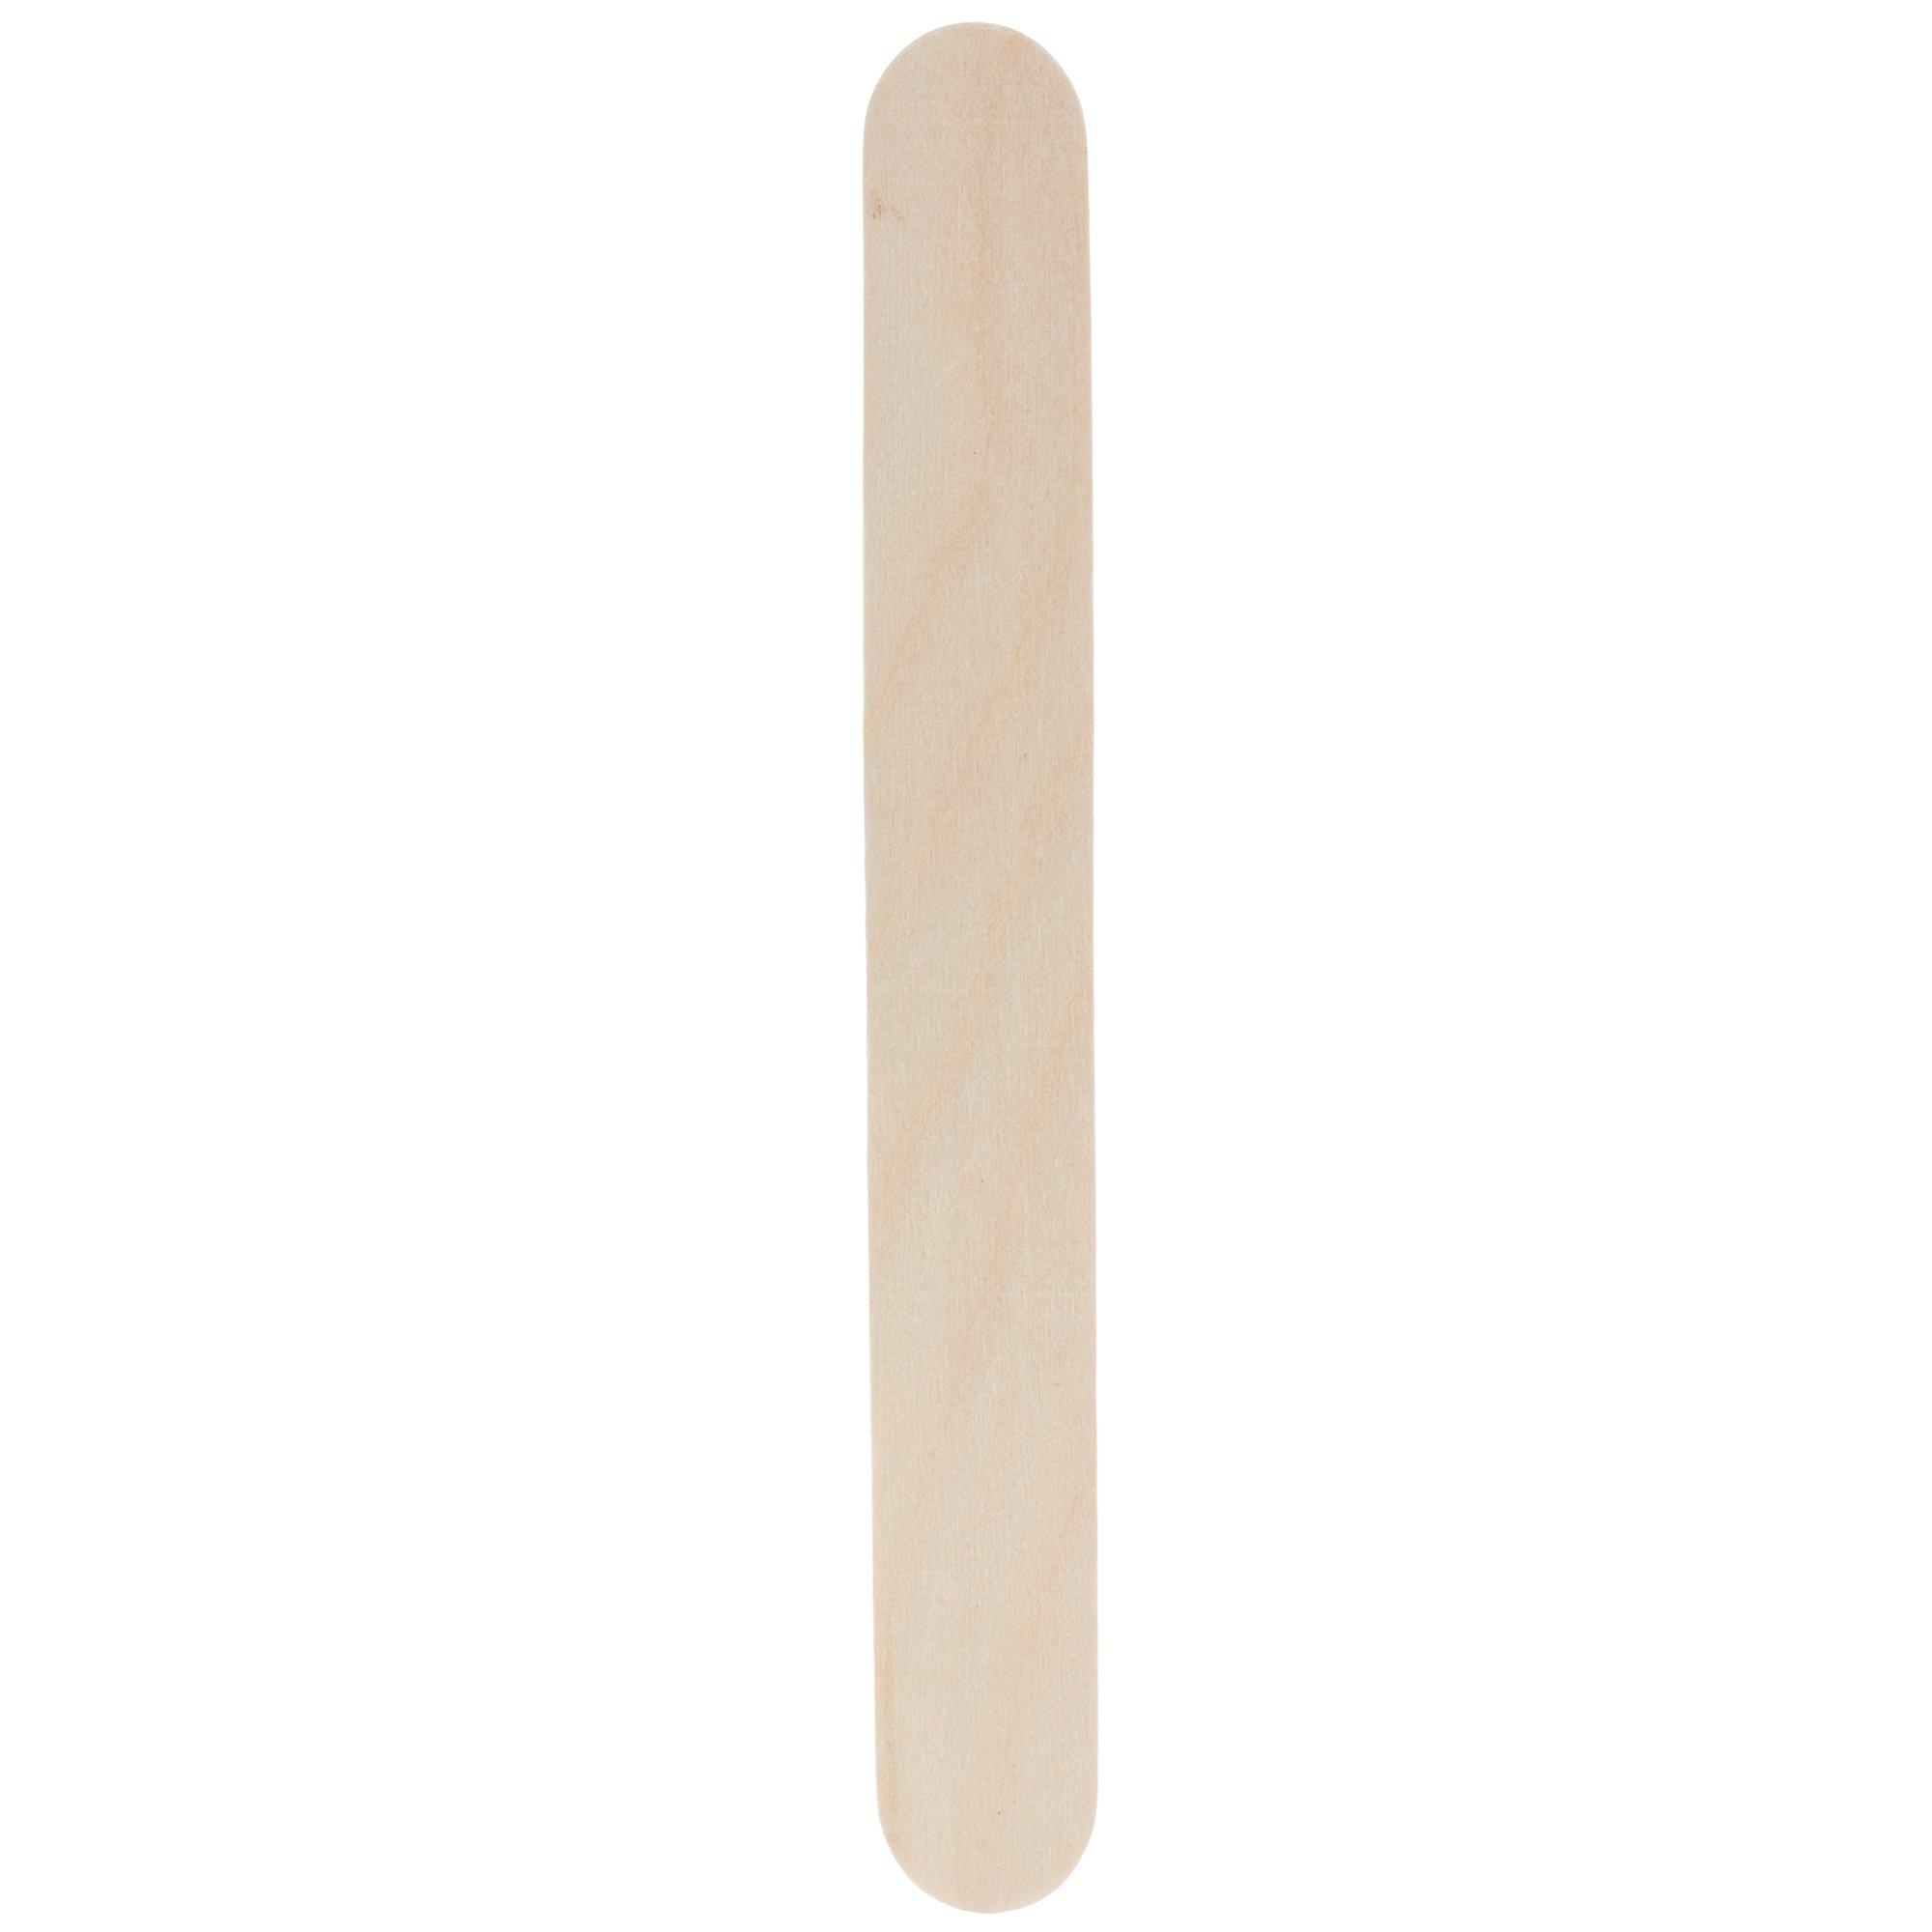  Mr Pen- Jumbo Wooden Craft Sticks, 100 Pack, 5.75 Inch,  Craft Sticks, Popsicle Sticks For Crafts, Large Popsicle Sticks, Jumbo  Popsicle Sticks, Wax Sticks For Waxing, Large Popsicle Sticks Jumbo